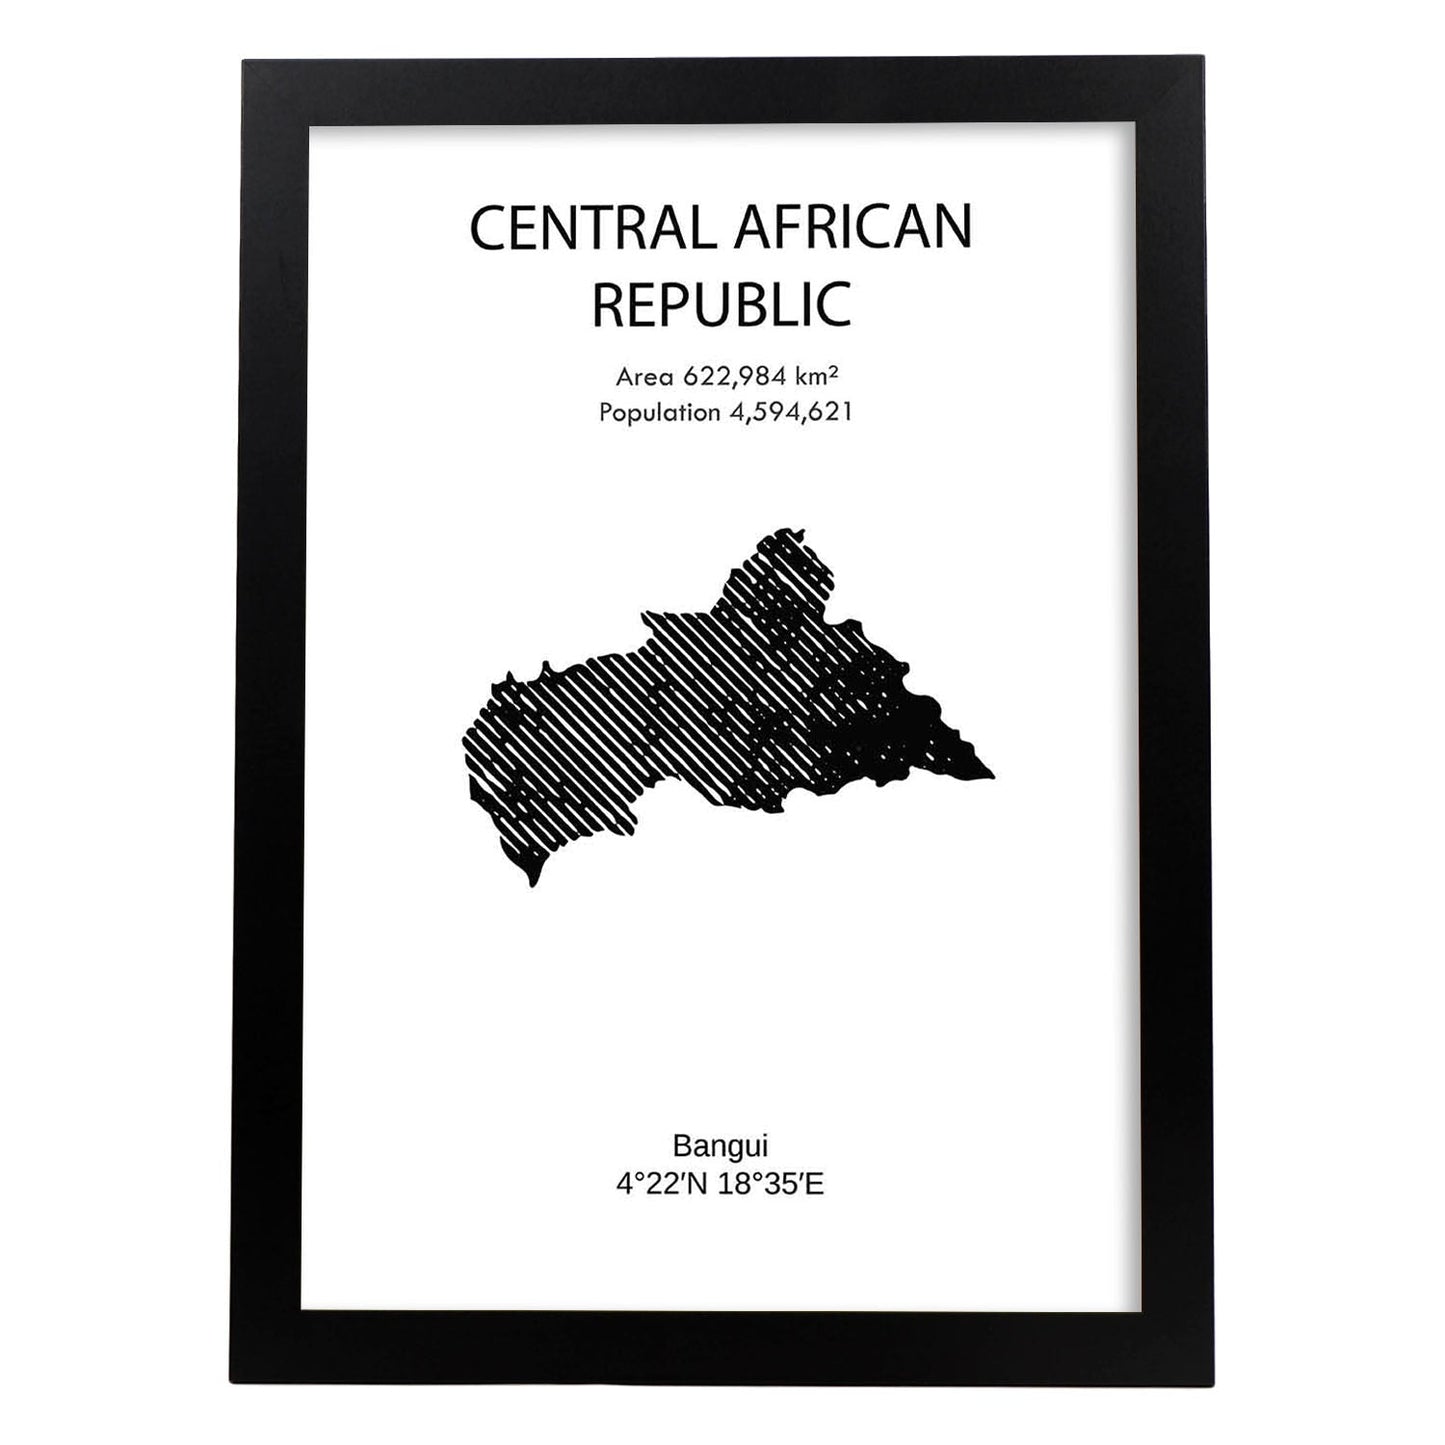 Poster de Africa central. Láminas de paises y continentes del mundo.-Artwork-Nacnic-A4-Marco Negro-Nacnic Estudio SL